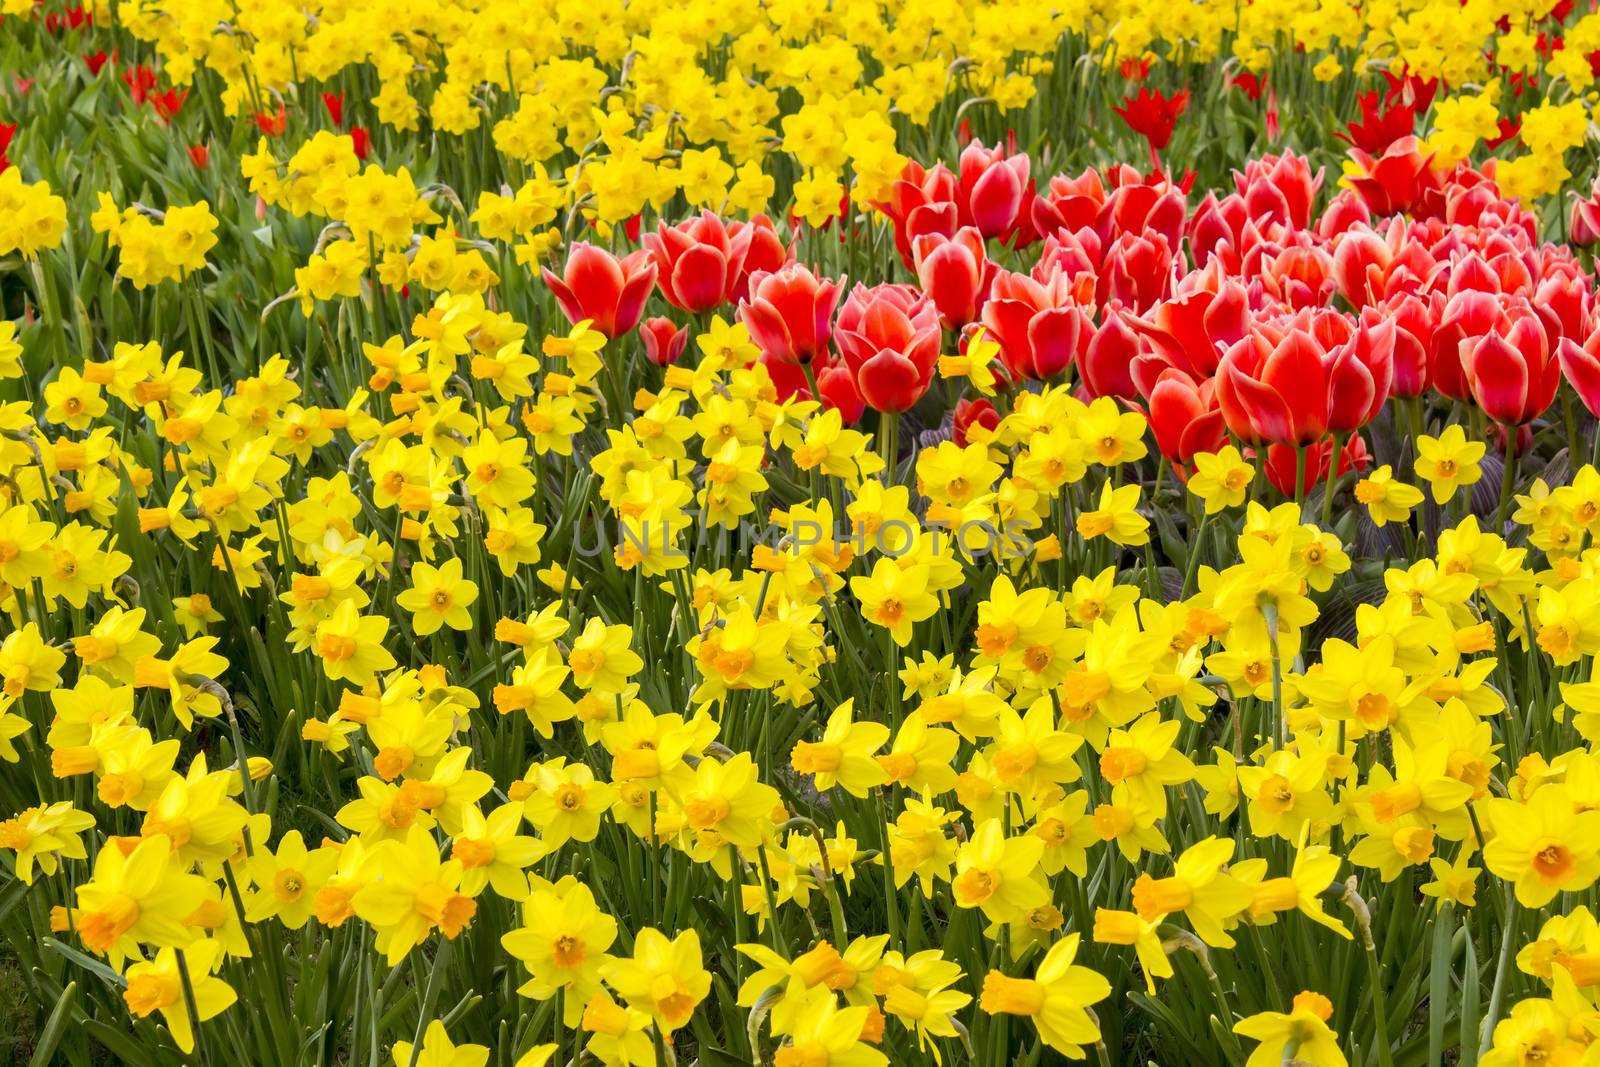 A spring field with spring flowers by miradrozdowski